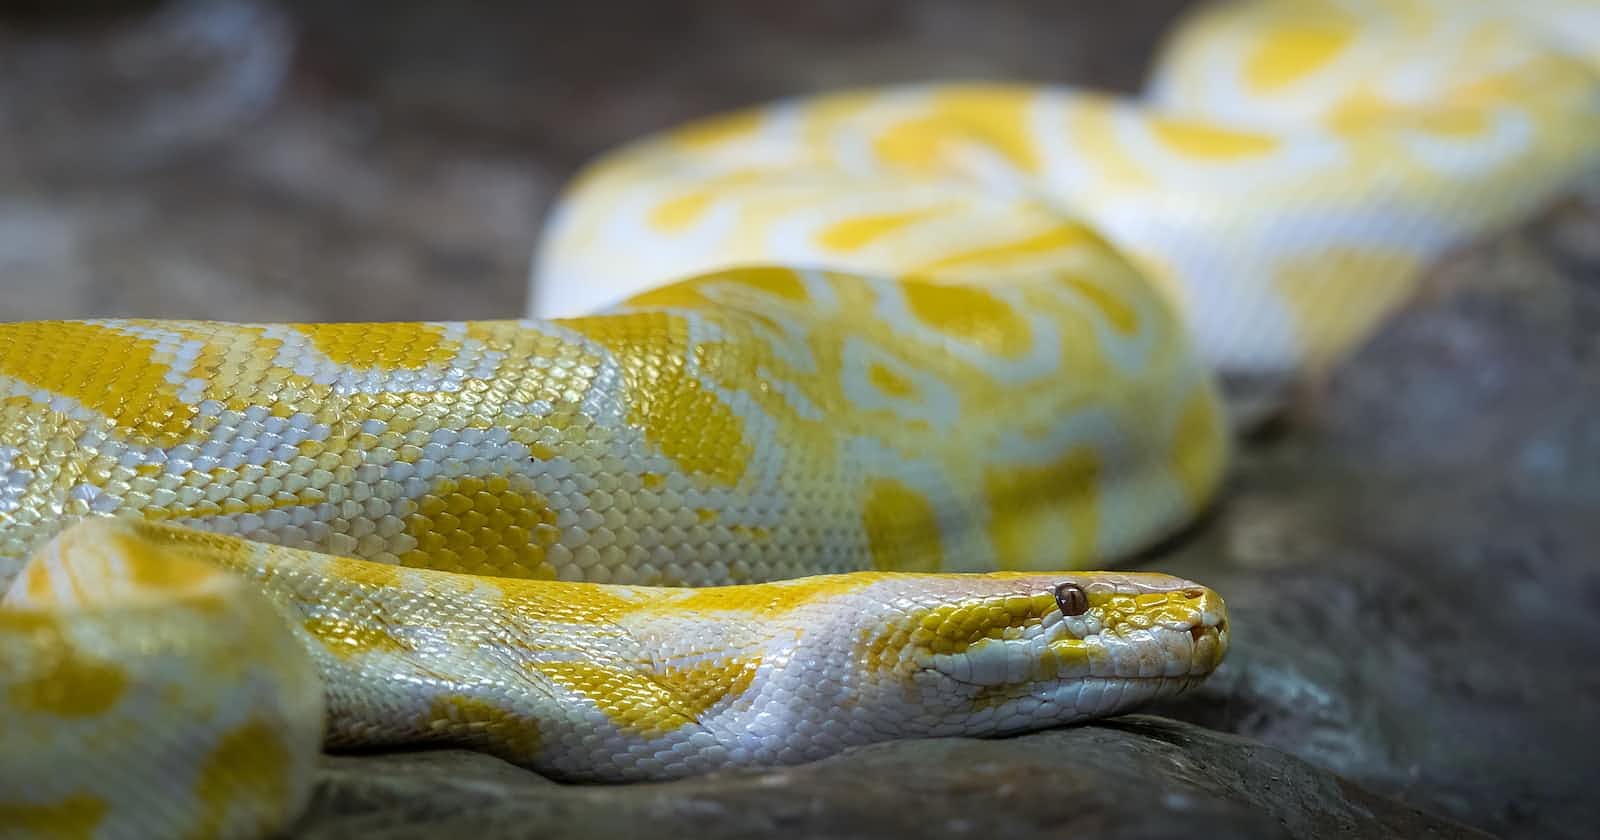 Like the Burmese Python, Python is everywhere!